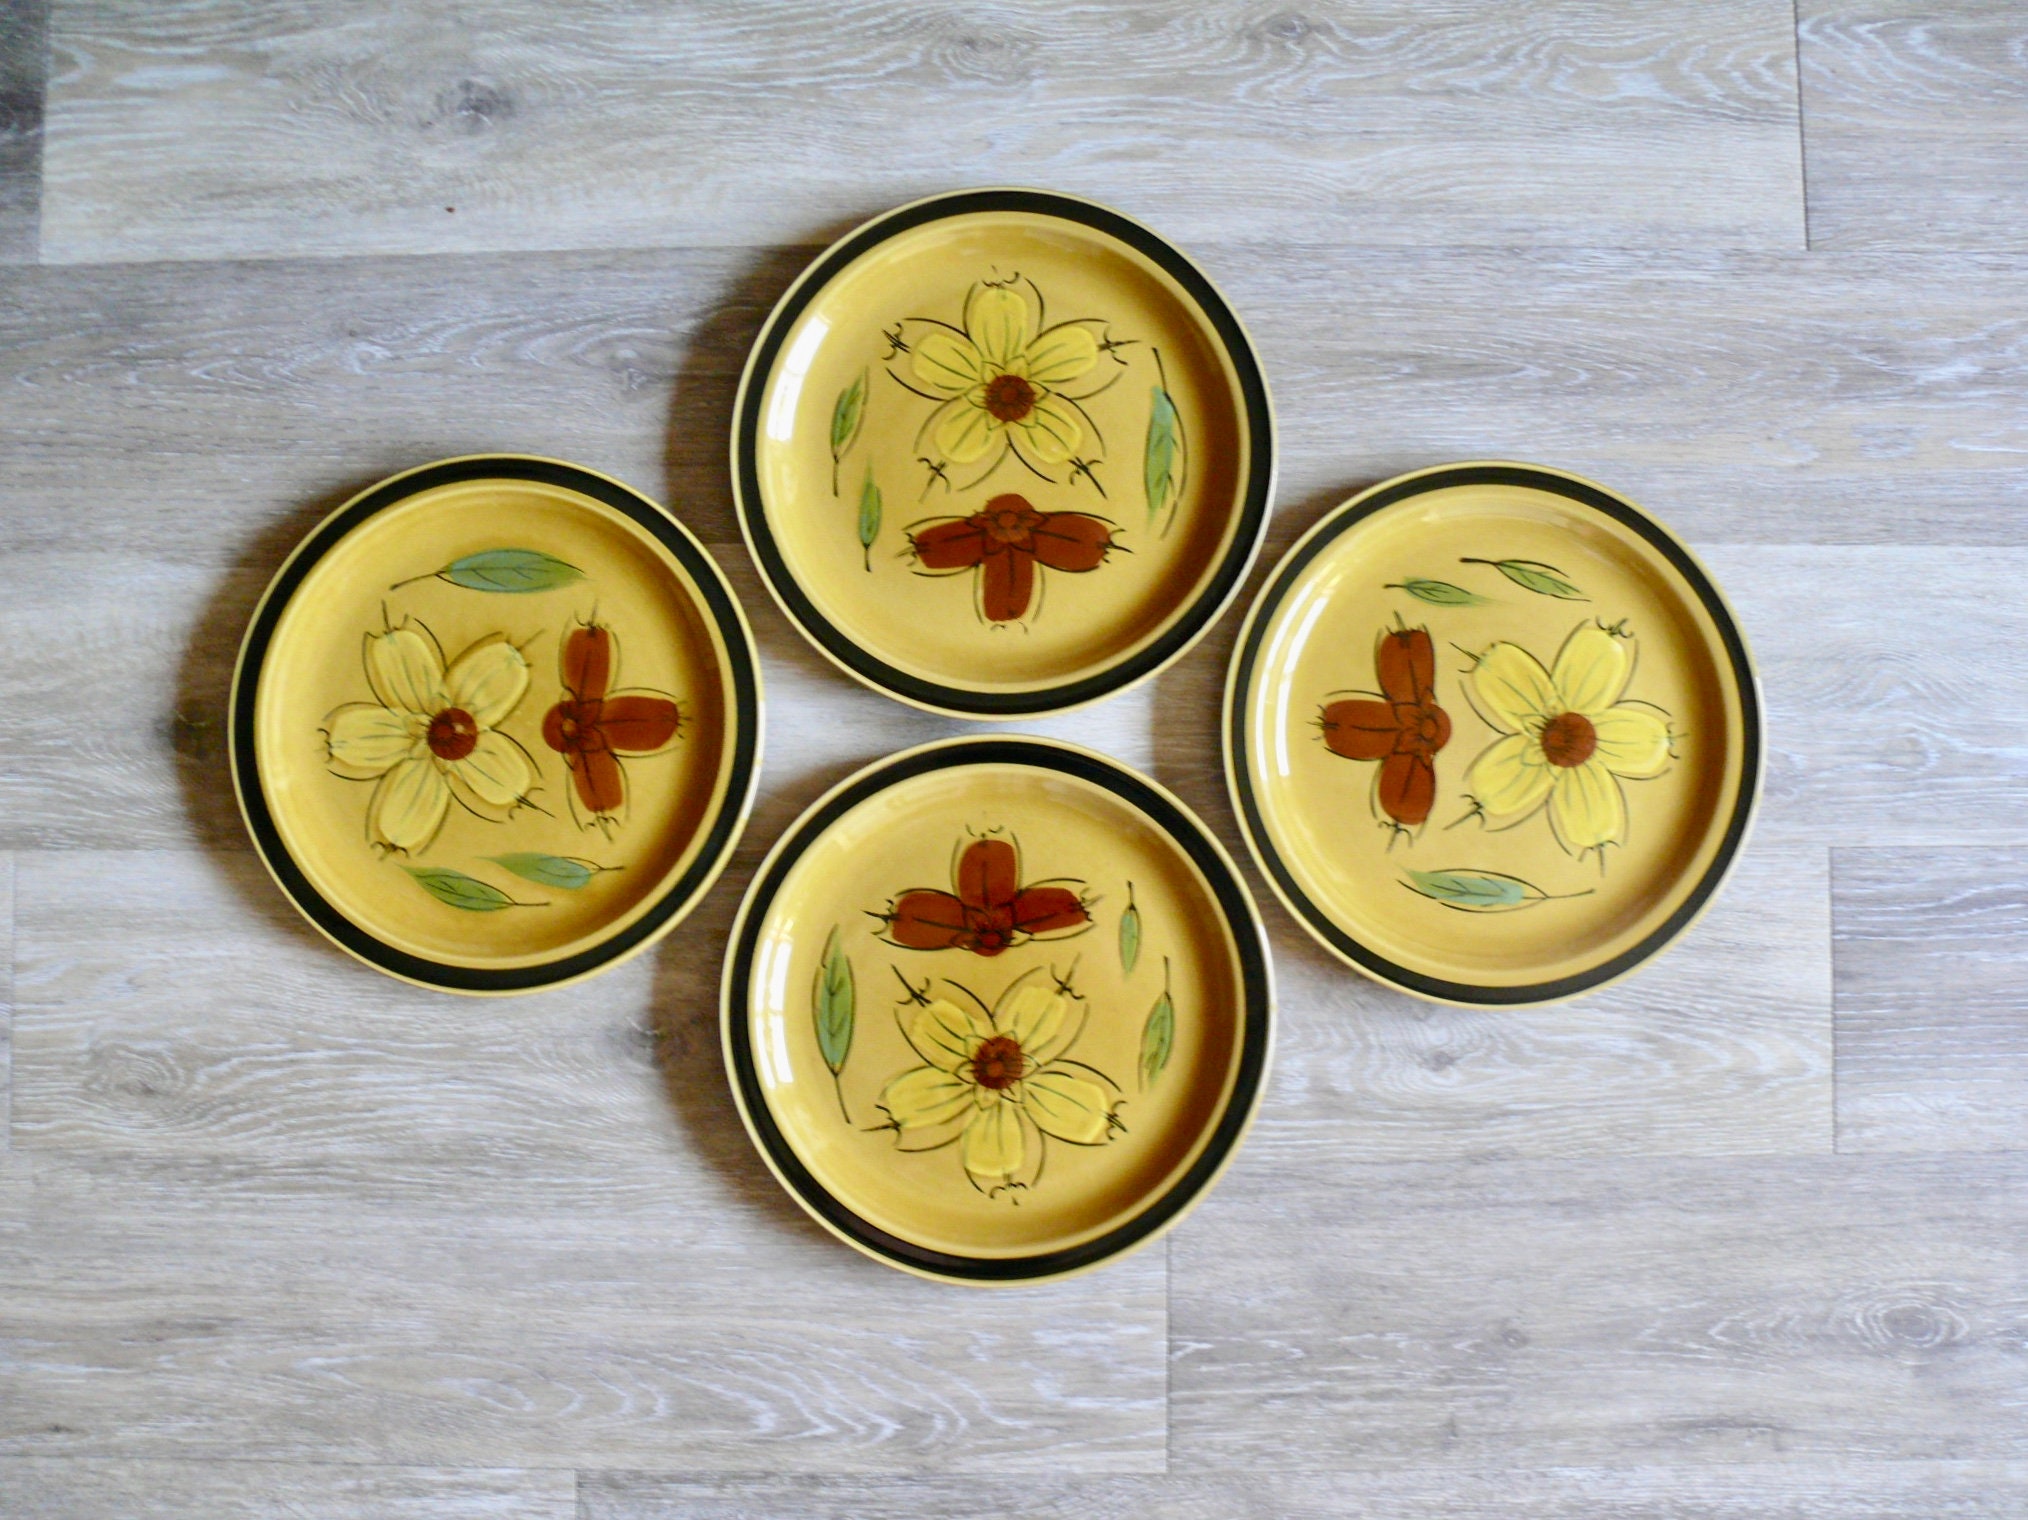 4 Honey Flower Japan Dinner Plates Vintage Earth Tone Brown hq image